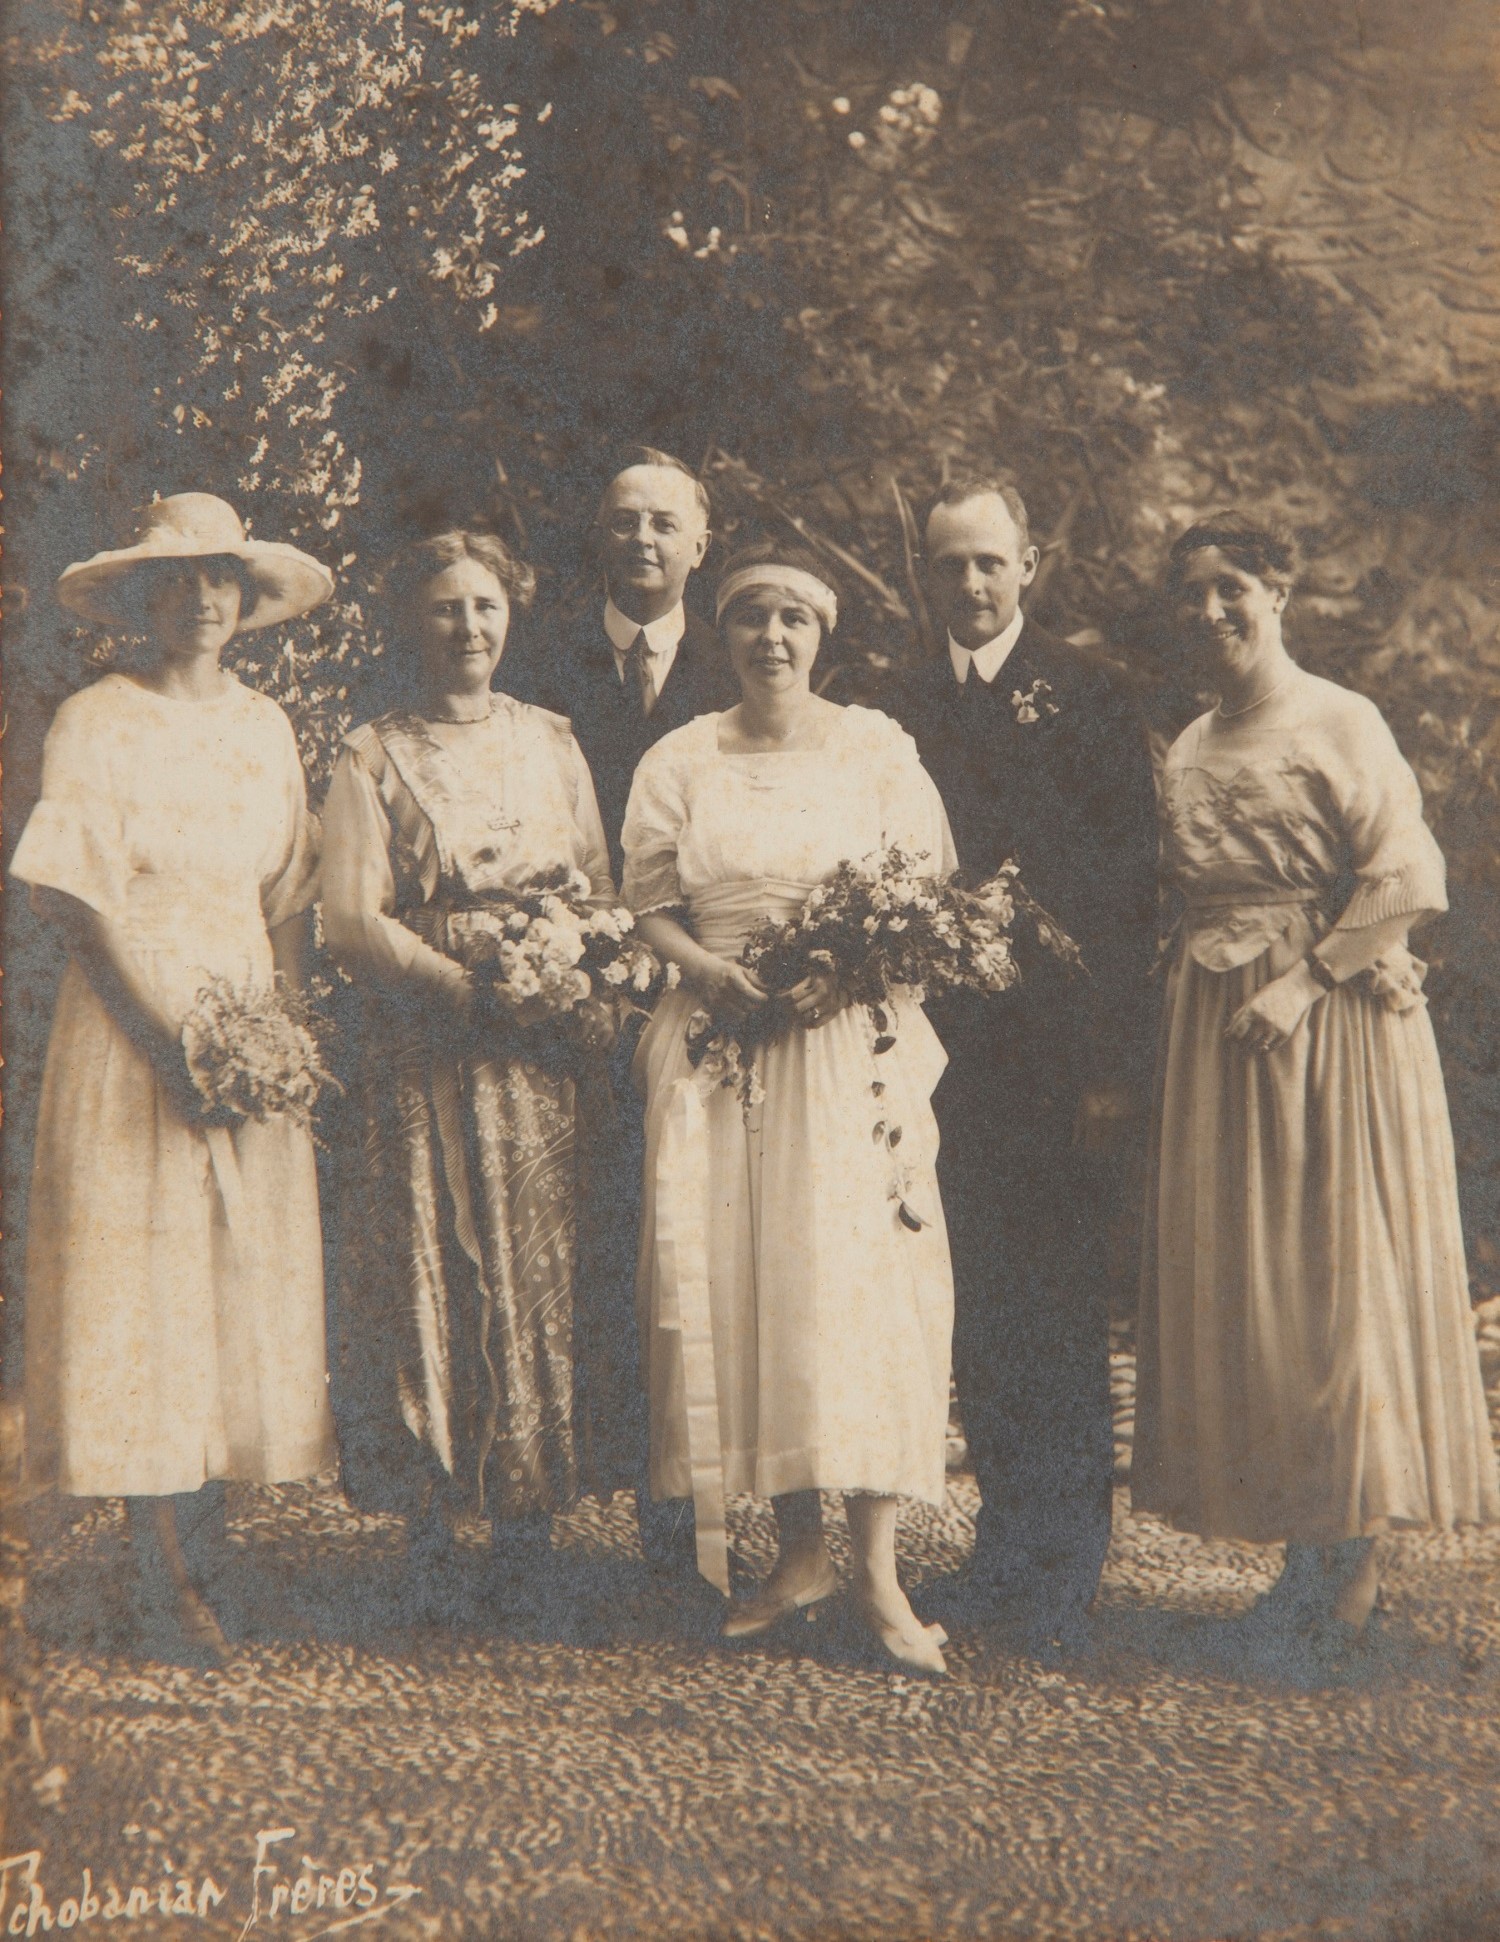 Wedding photo of Eveline Thomson and Harold Scott, 1920